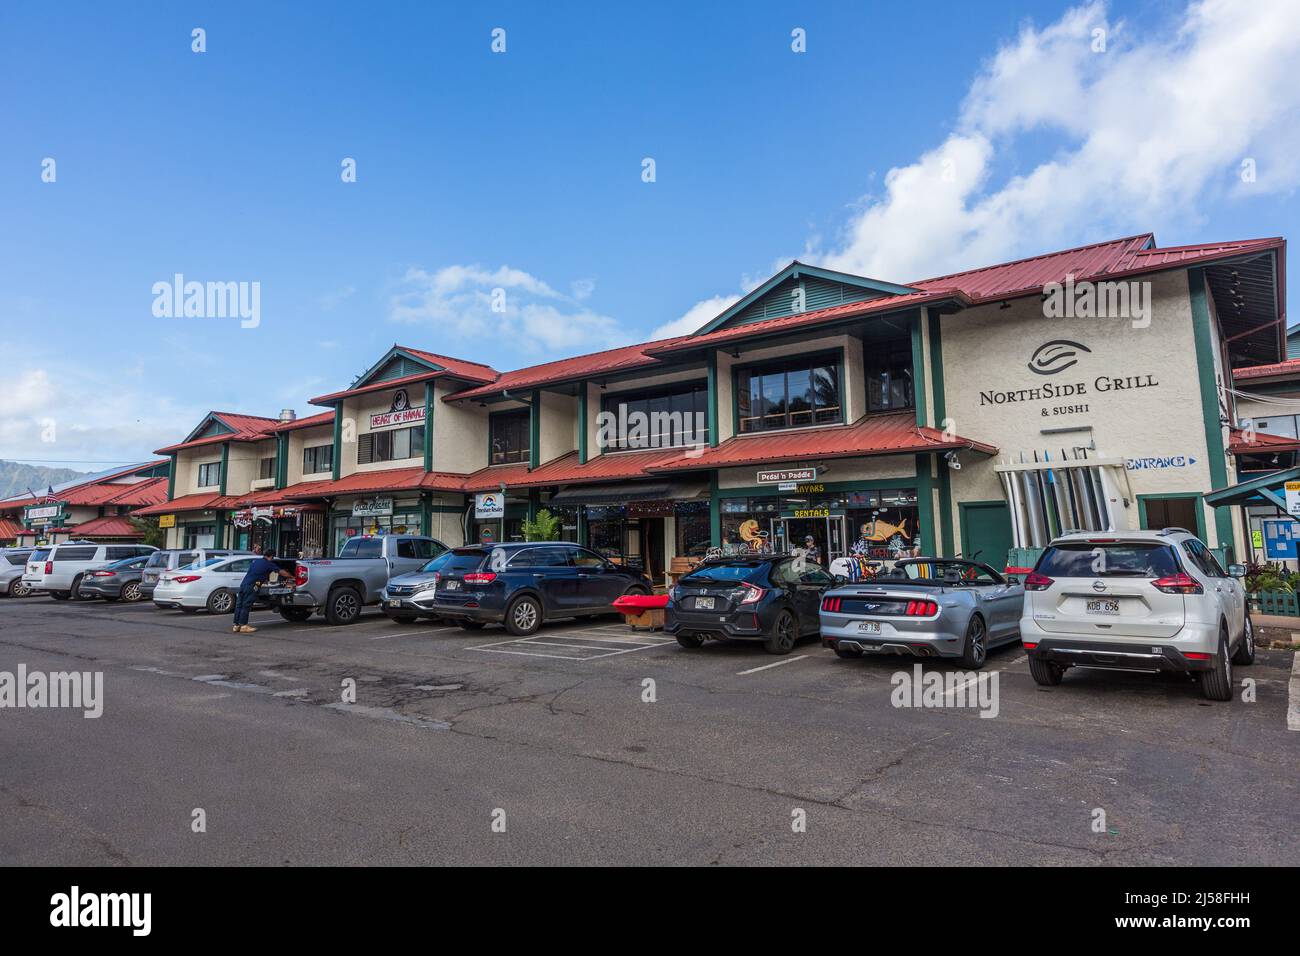 Restaurants and tourist shops in a shopping center in Hanalei, Kauai, Hawaii. Stock Photo